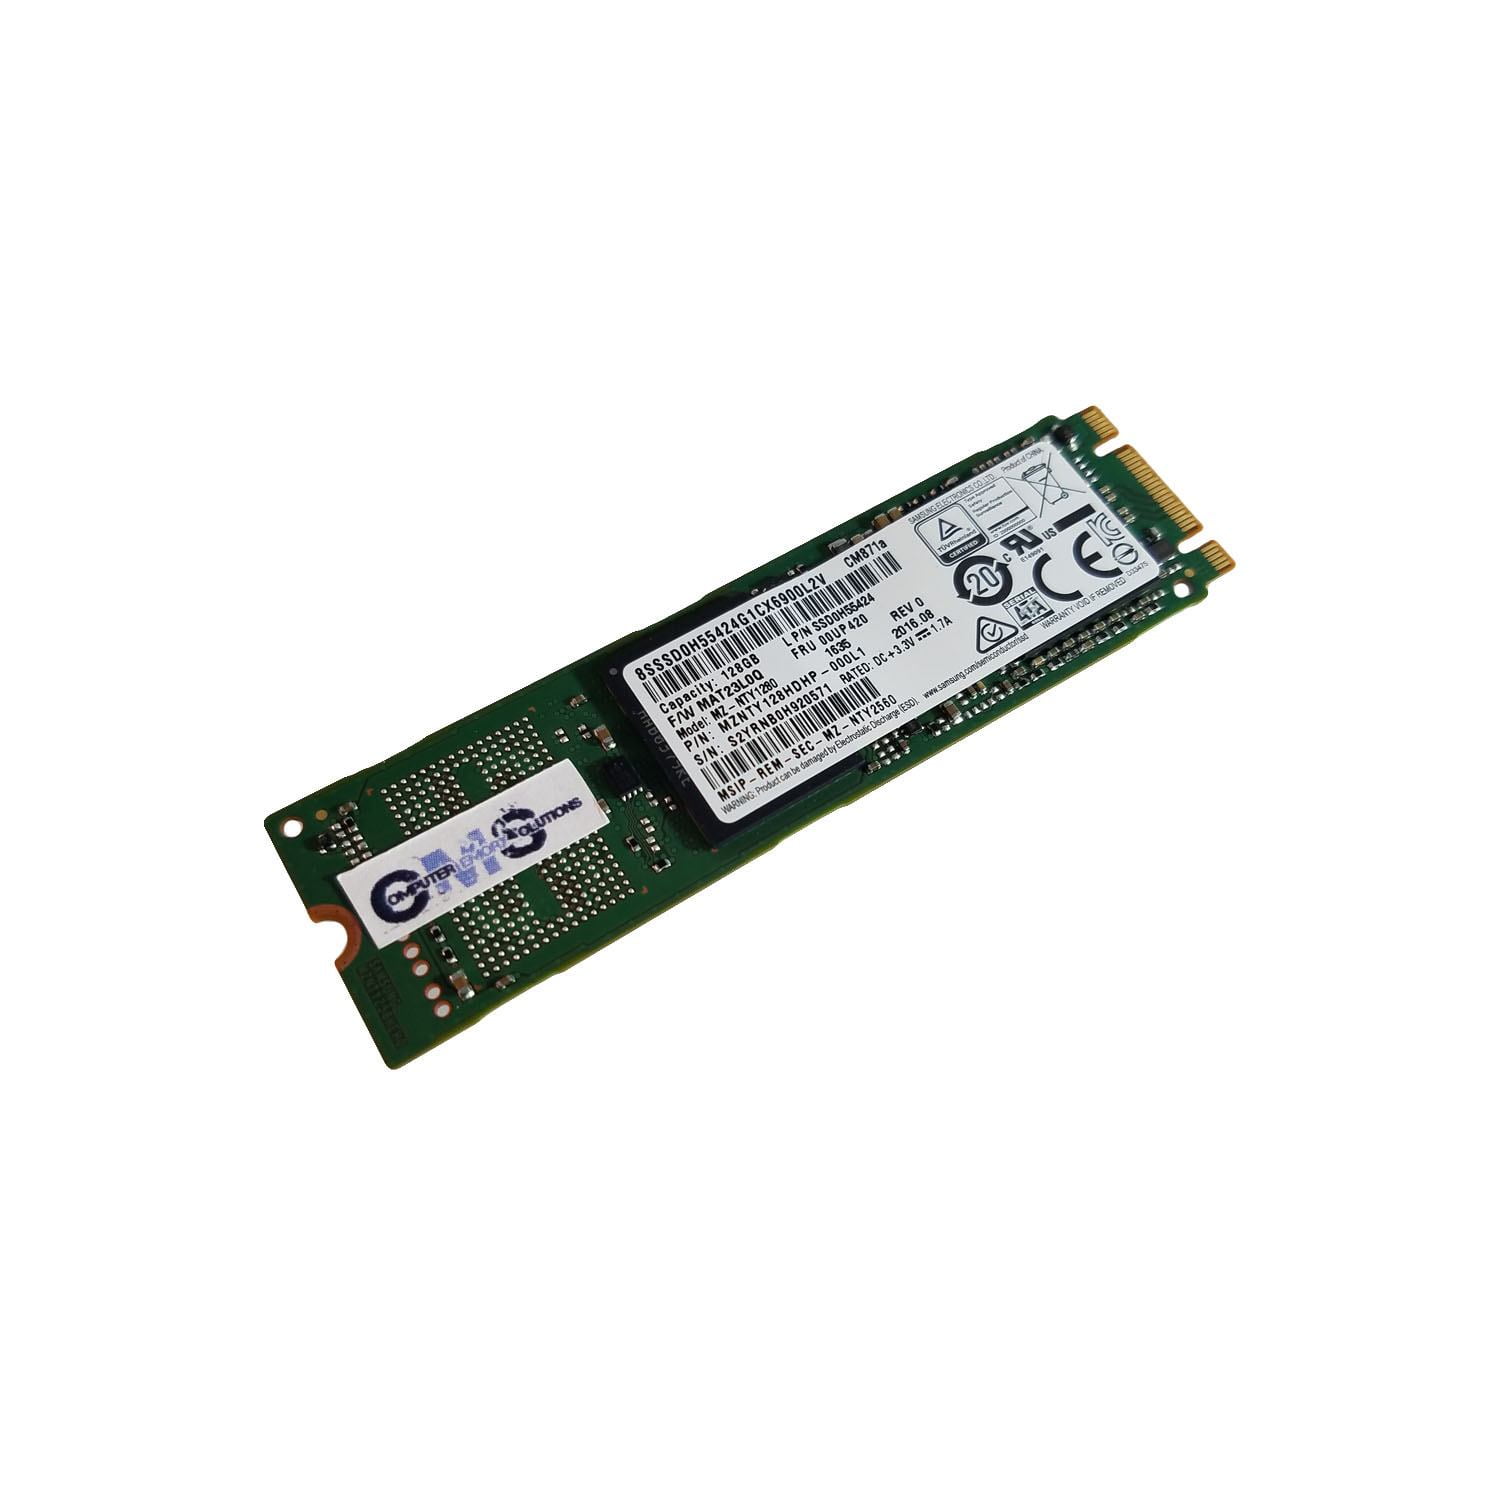 Gen 6 by CMS C67 128GB SSDNow M.2 SATA 6Gb Compatible with Lenovo ThinkPad X1 Carbon 